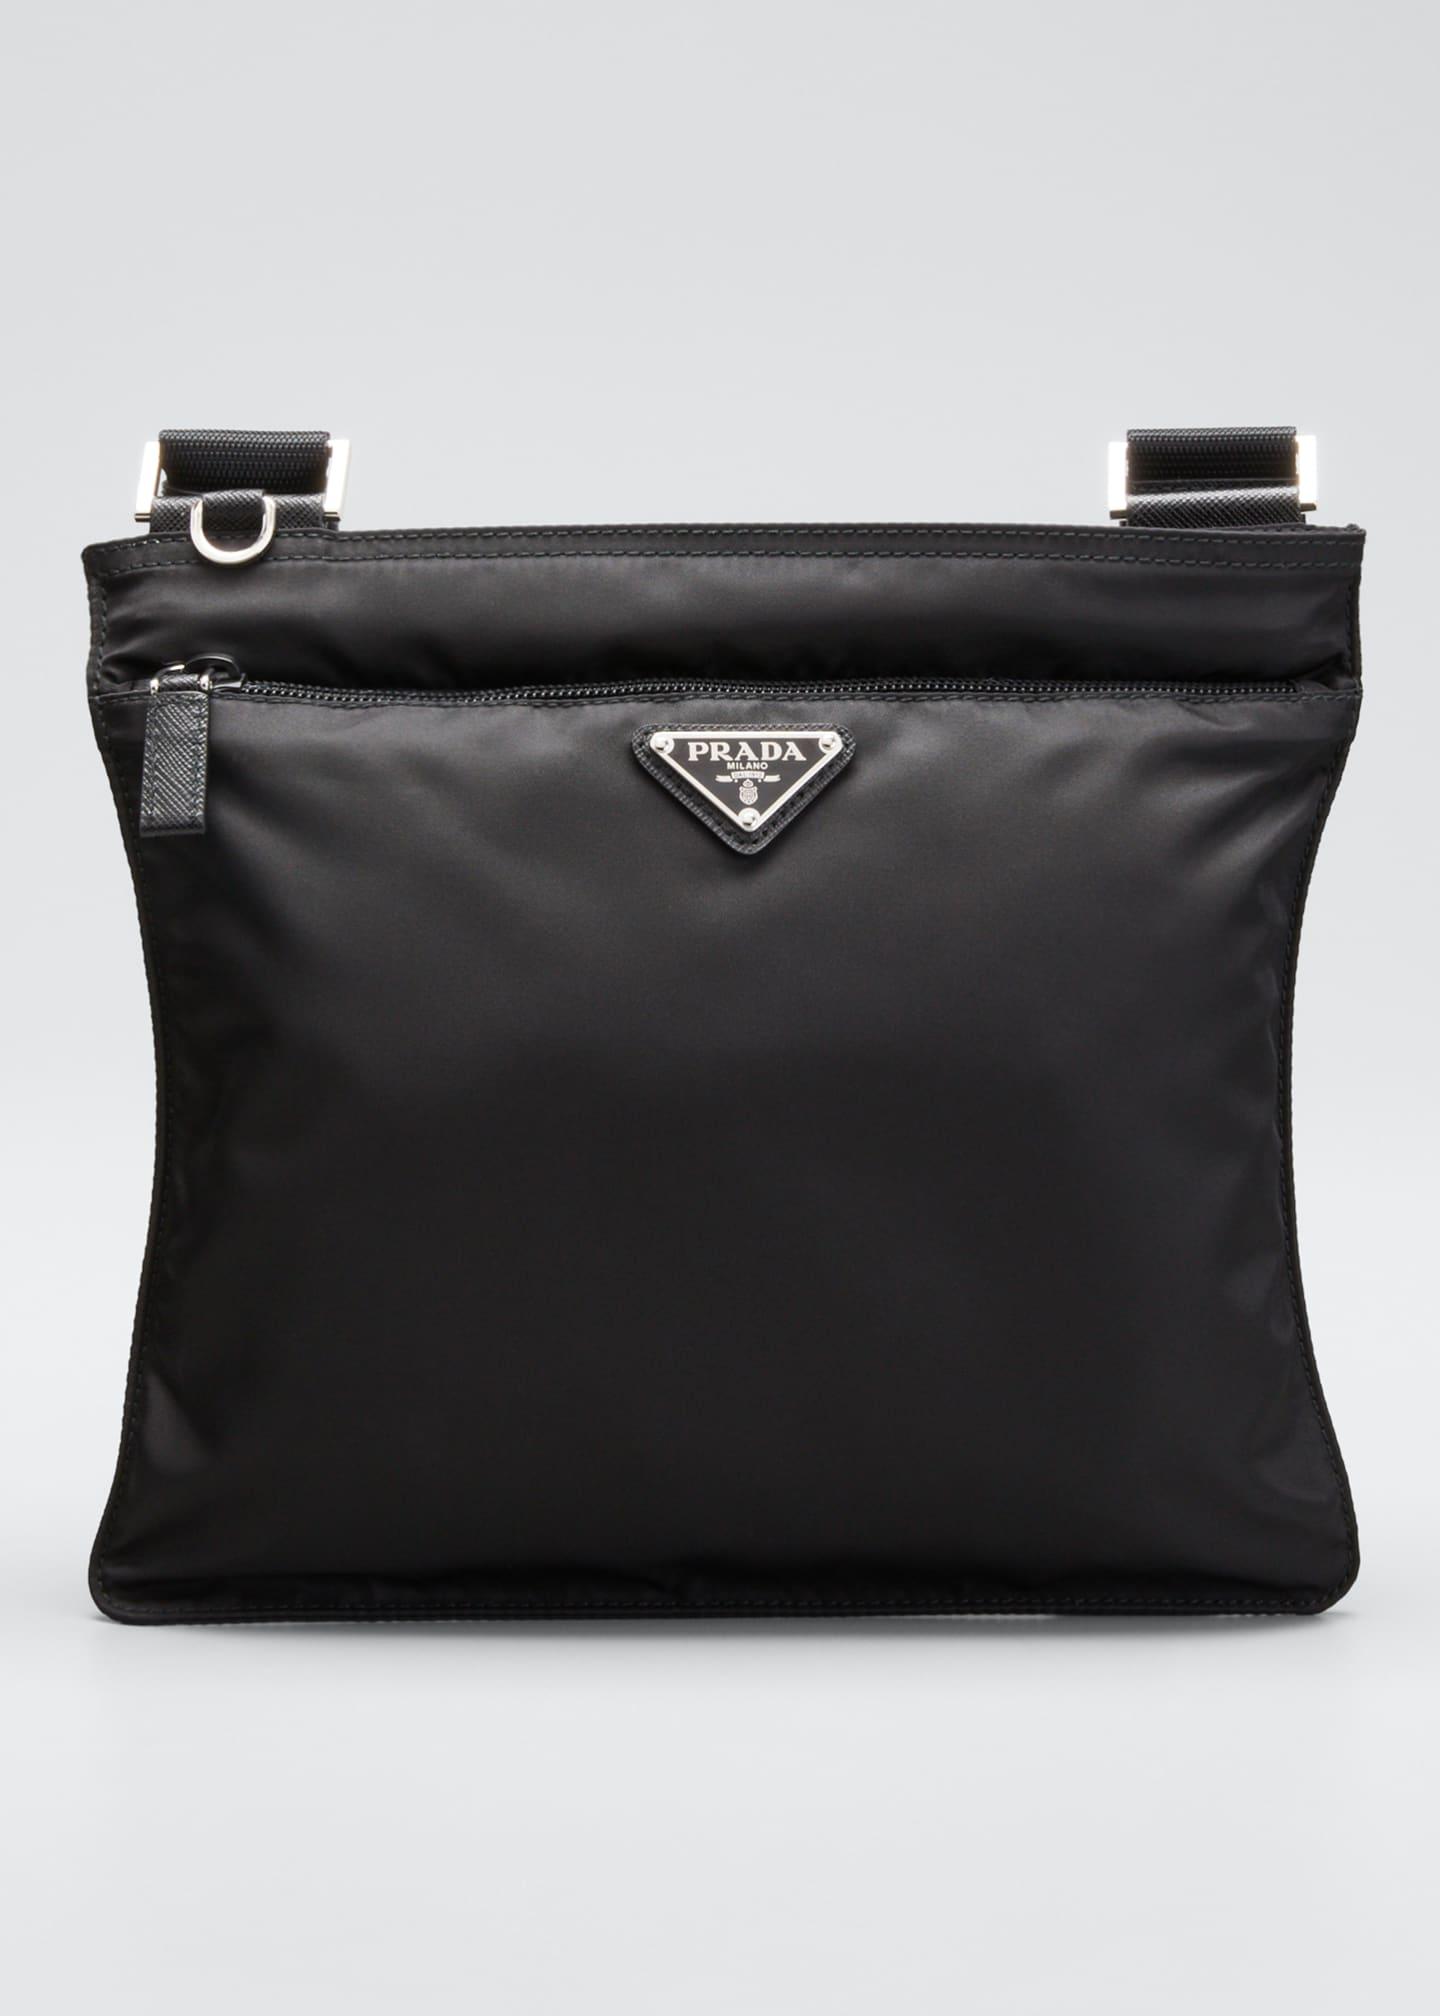 Prada Small Nylon Crossbody Bag in Black - Save 9% - Lyst